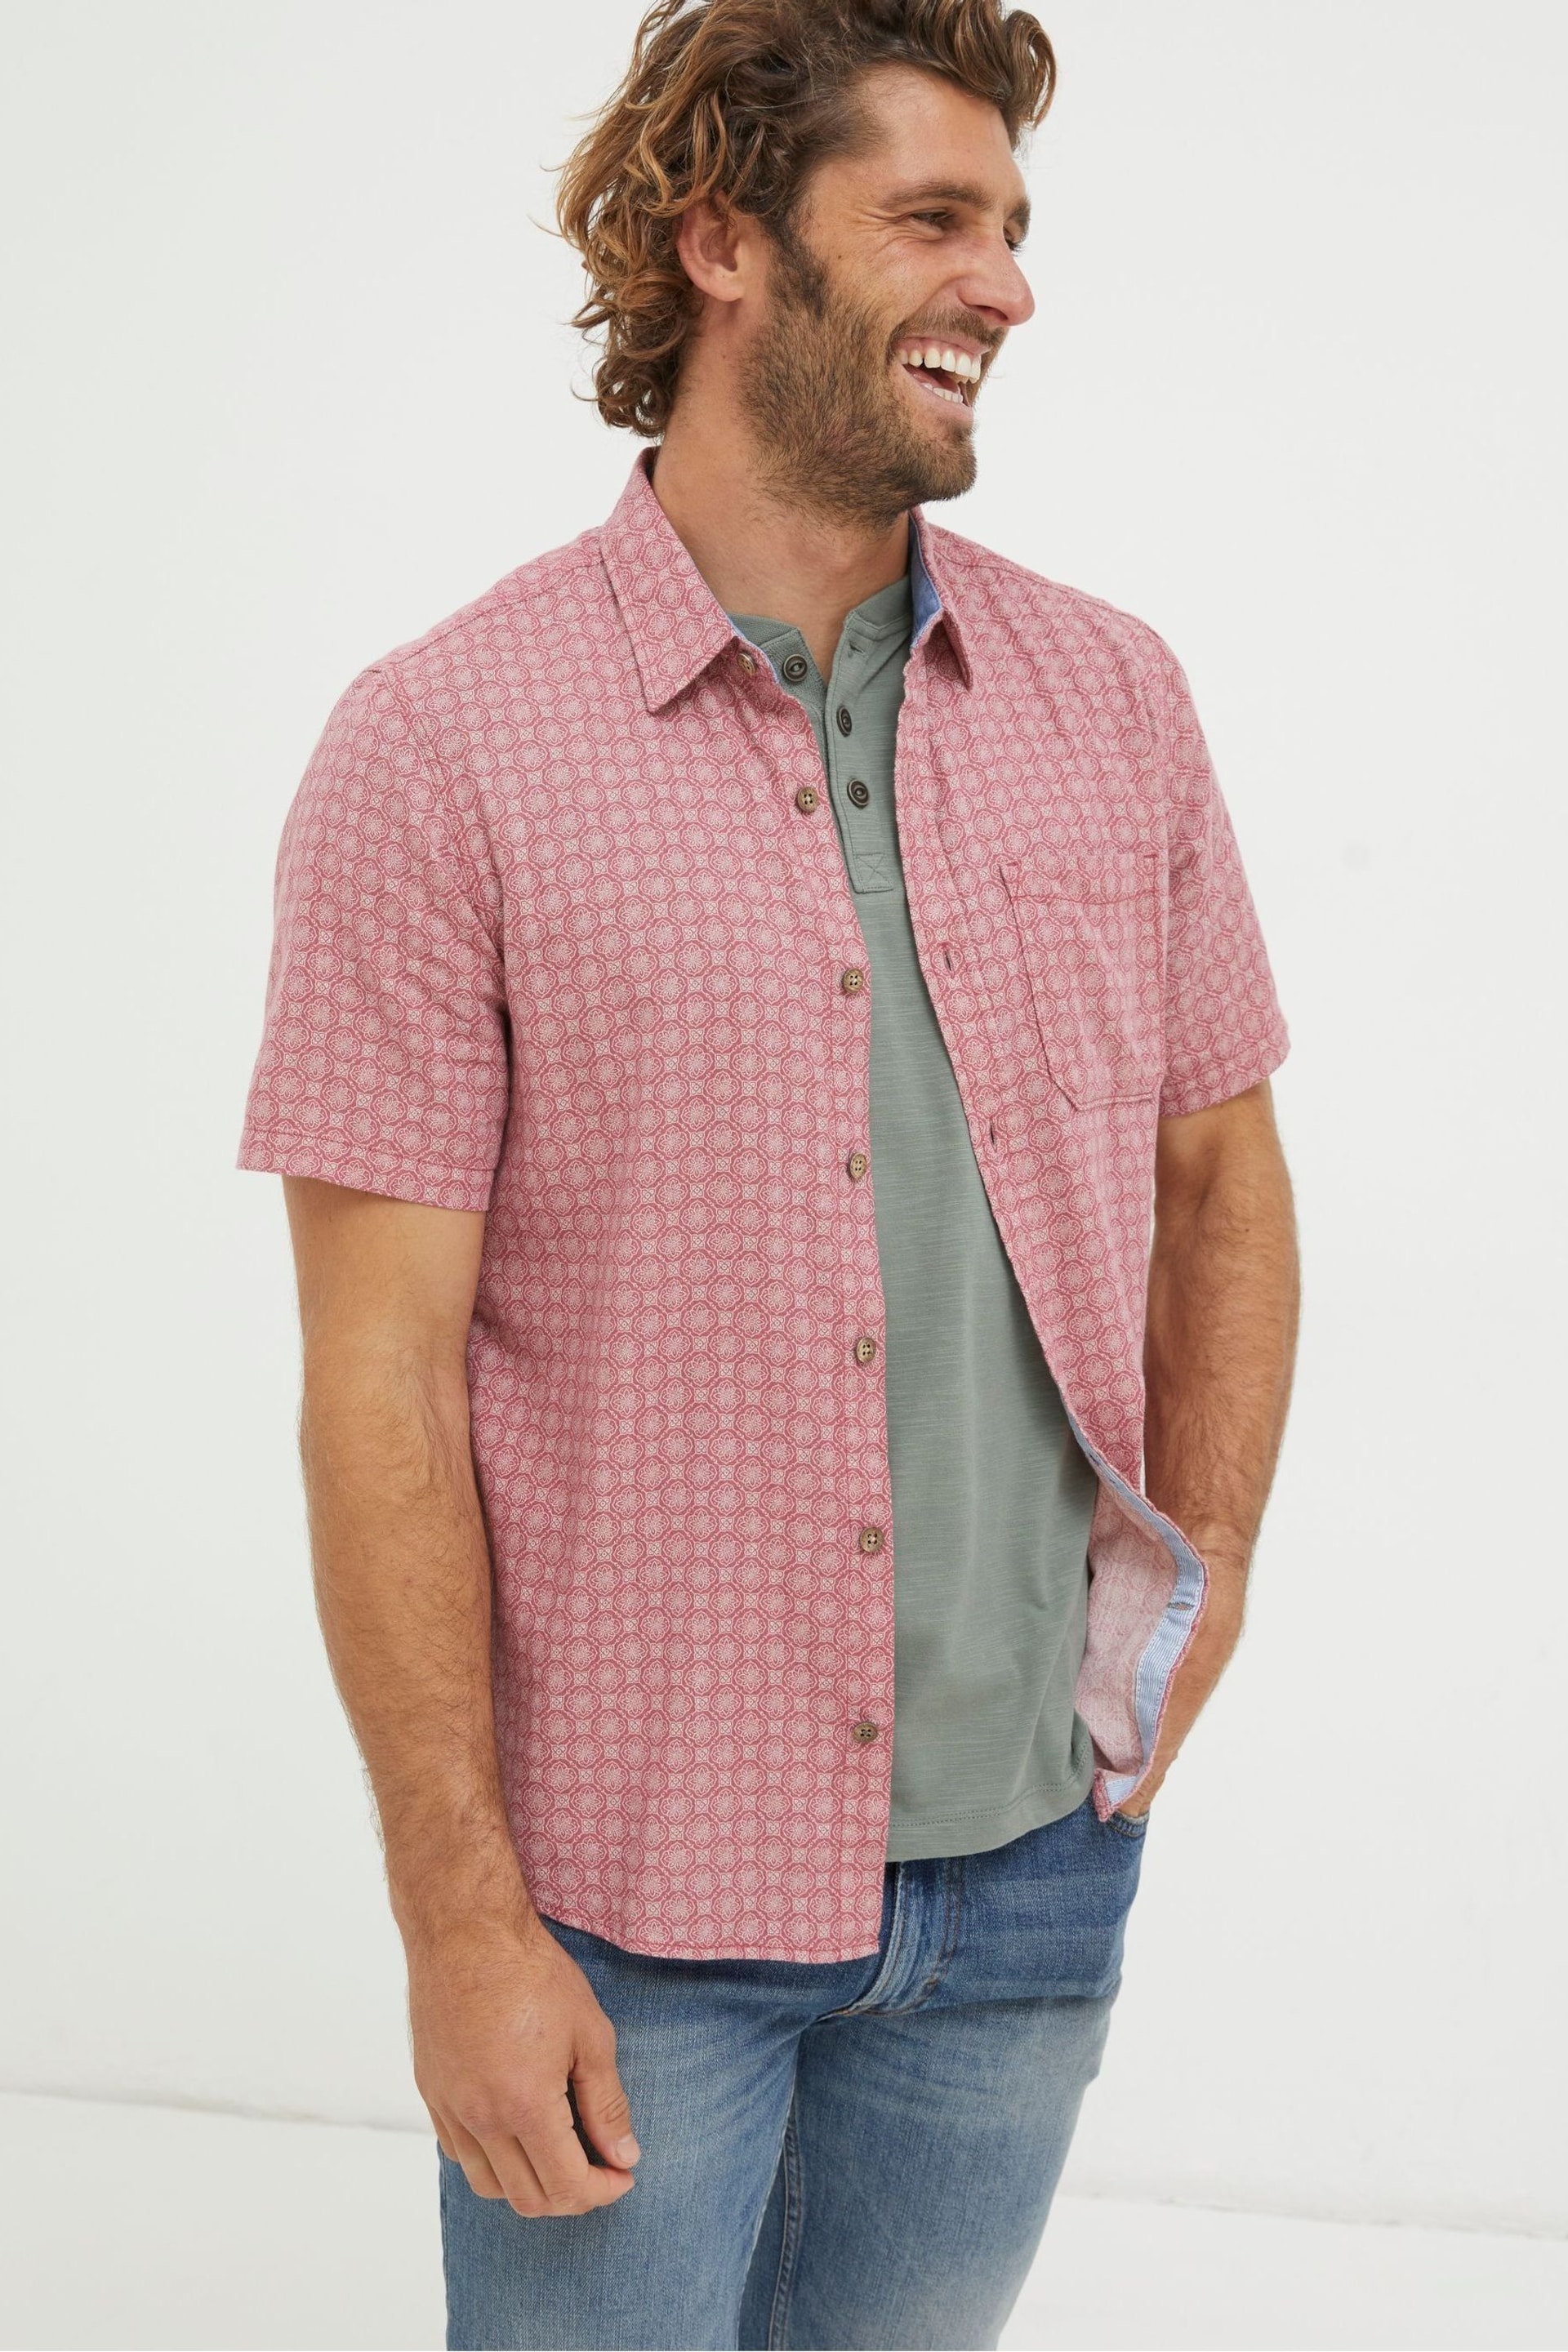 FatFace Pink Linear Print Shirt - Image 1 of 3